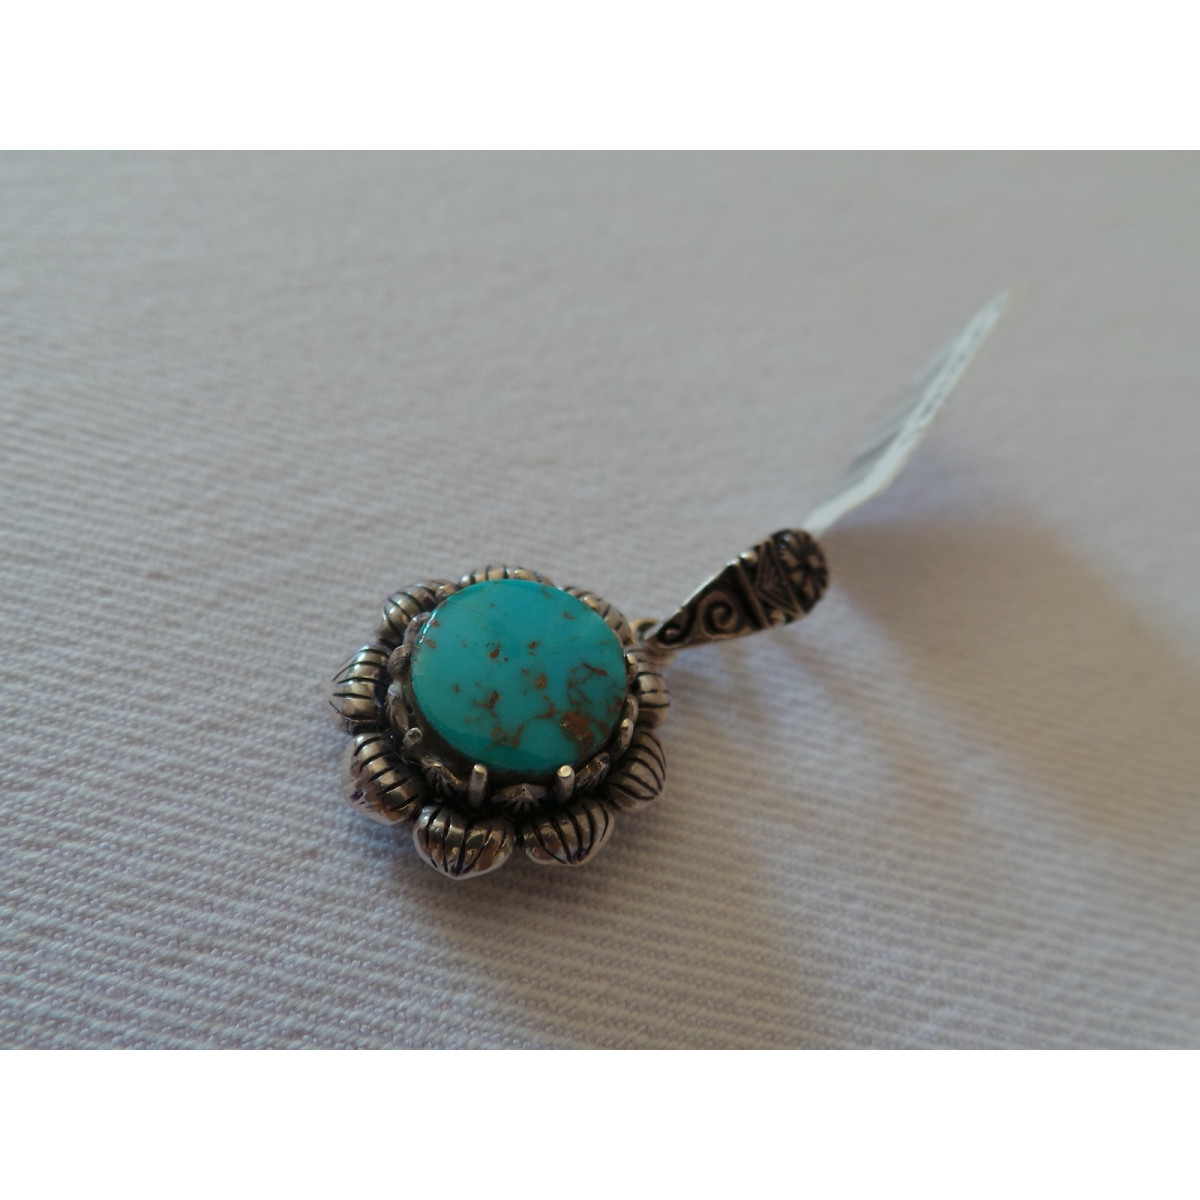 Handmade Turquoise Stone and Silver Pendant  - HA2092-Persian Handicrafts